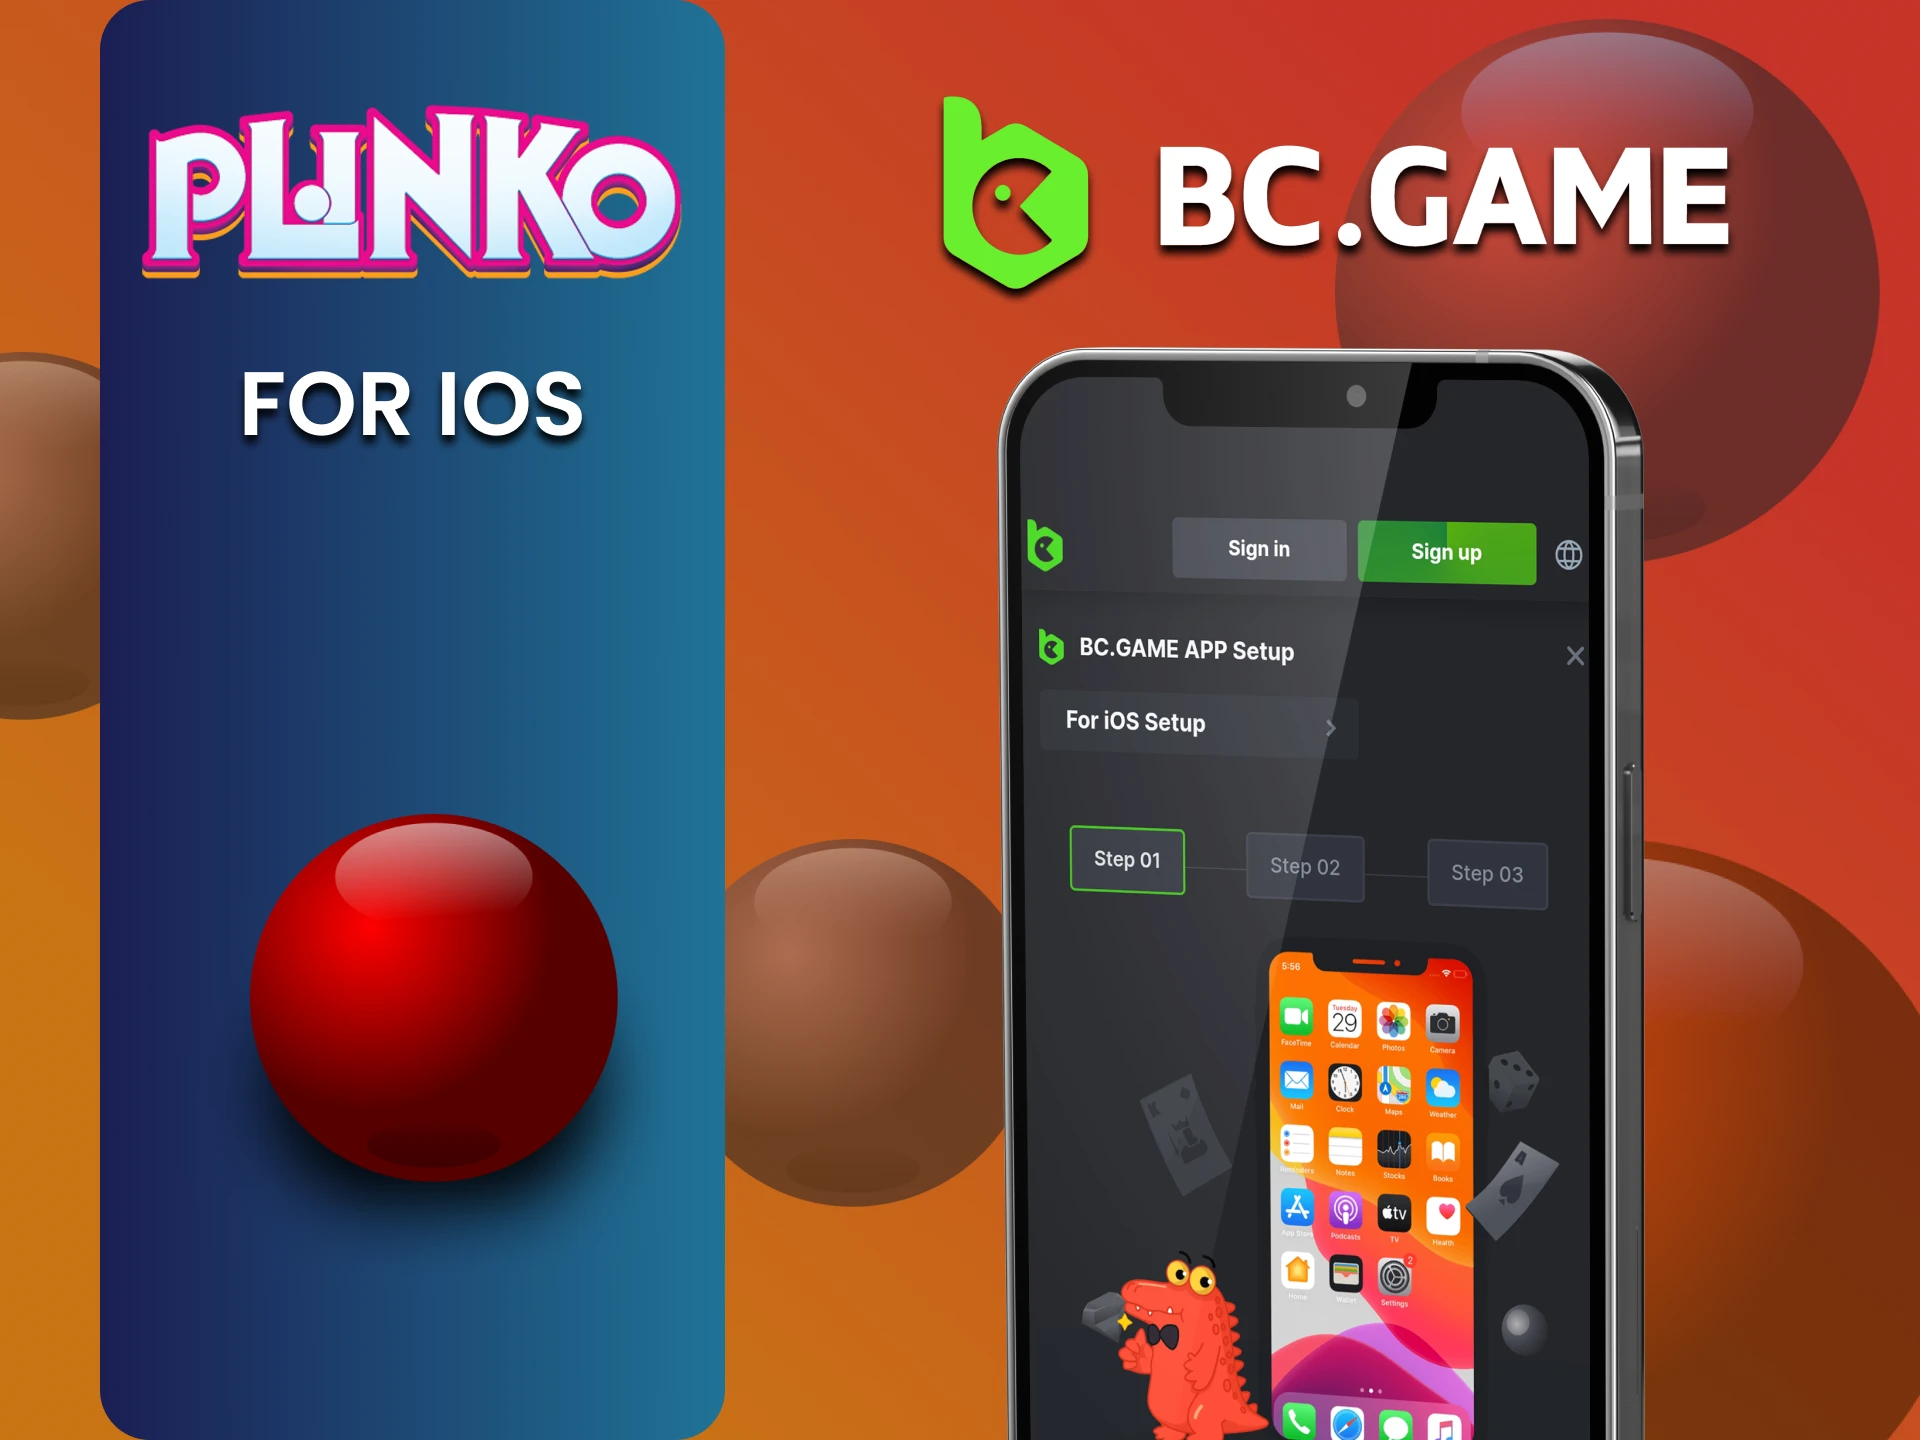 Download the BCGame app to play Plinko on iOS.